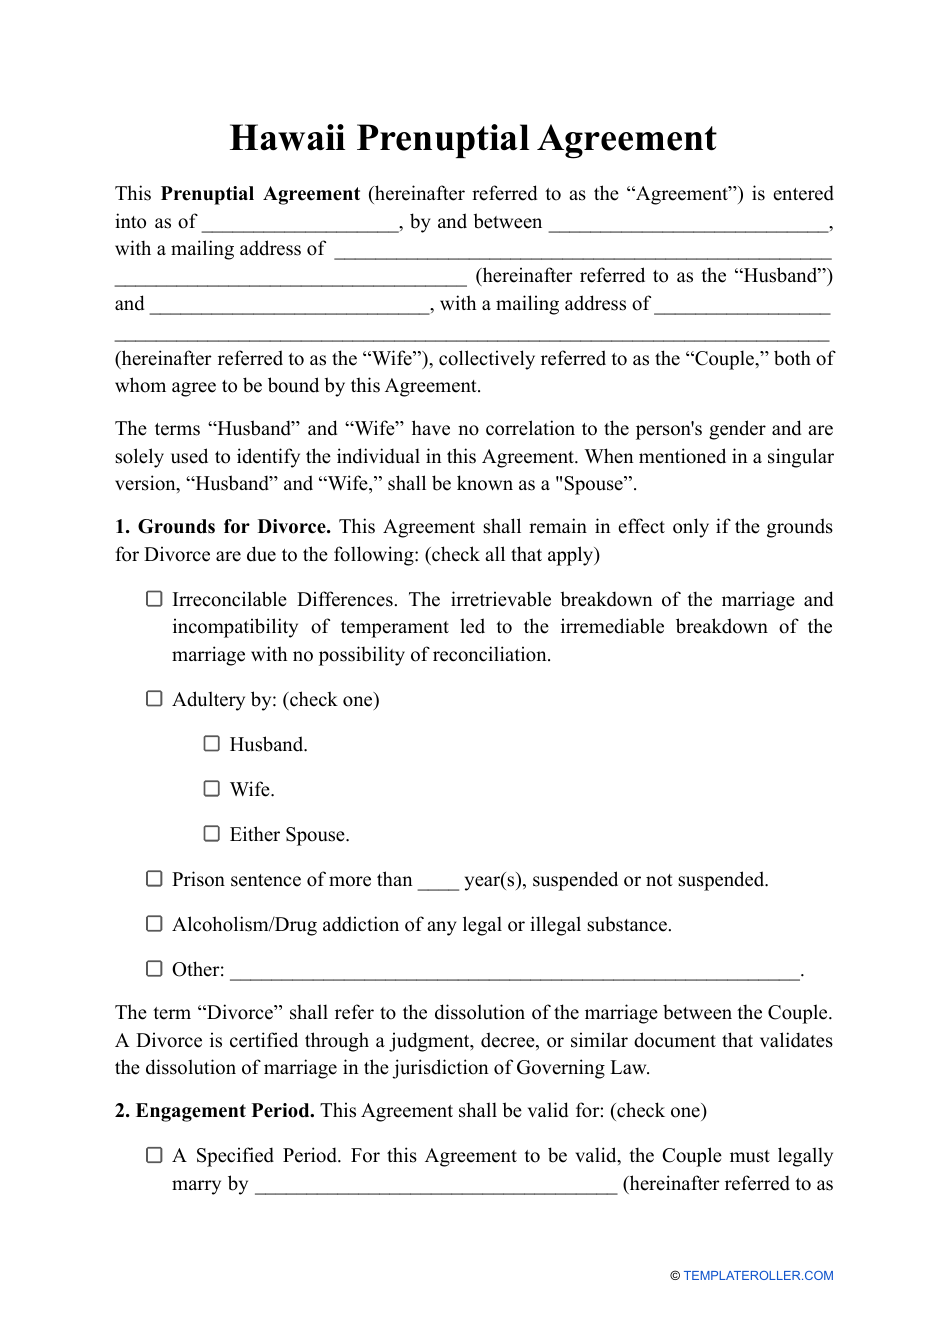 Prenuptial Agreement Template - Hawaii, Page 1